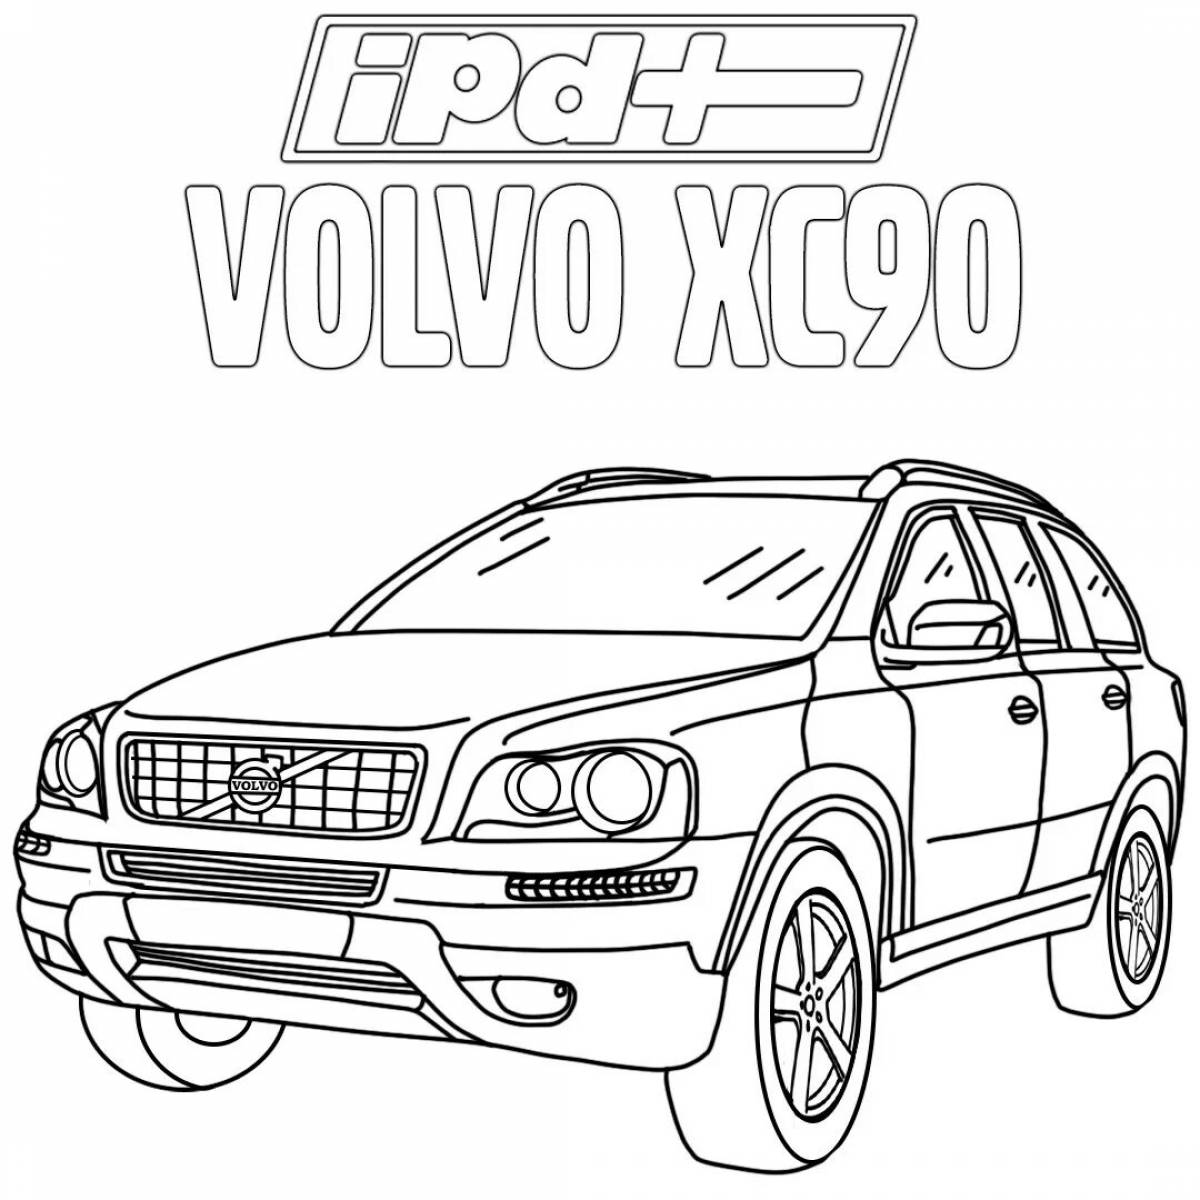 Volvo car #5